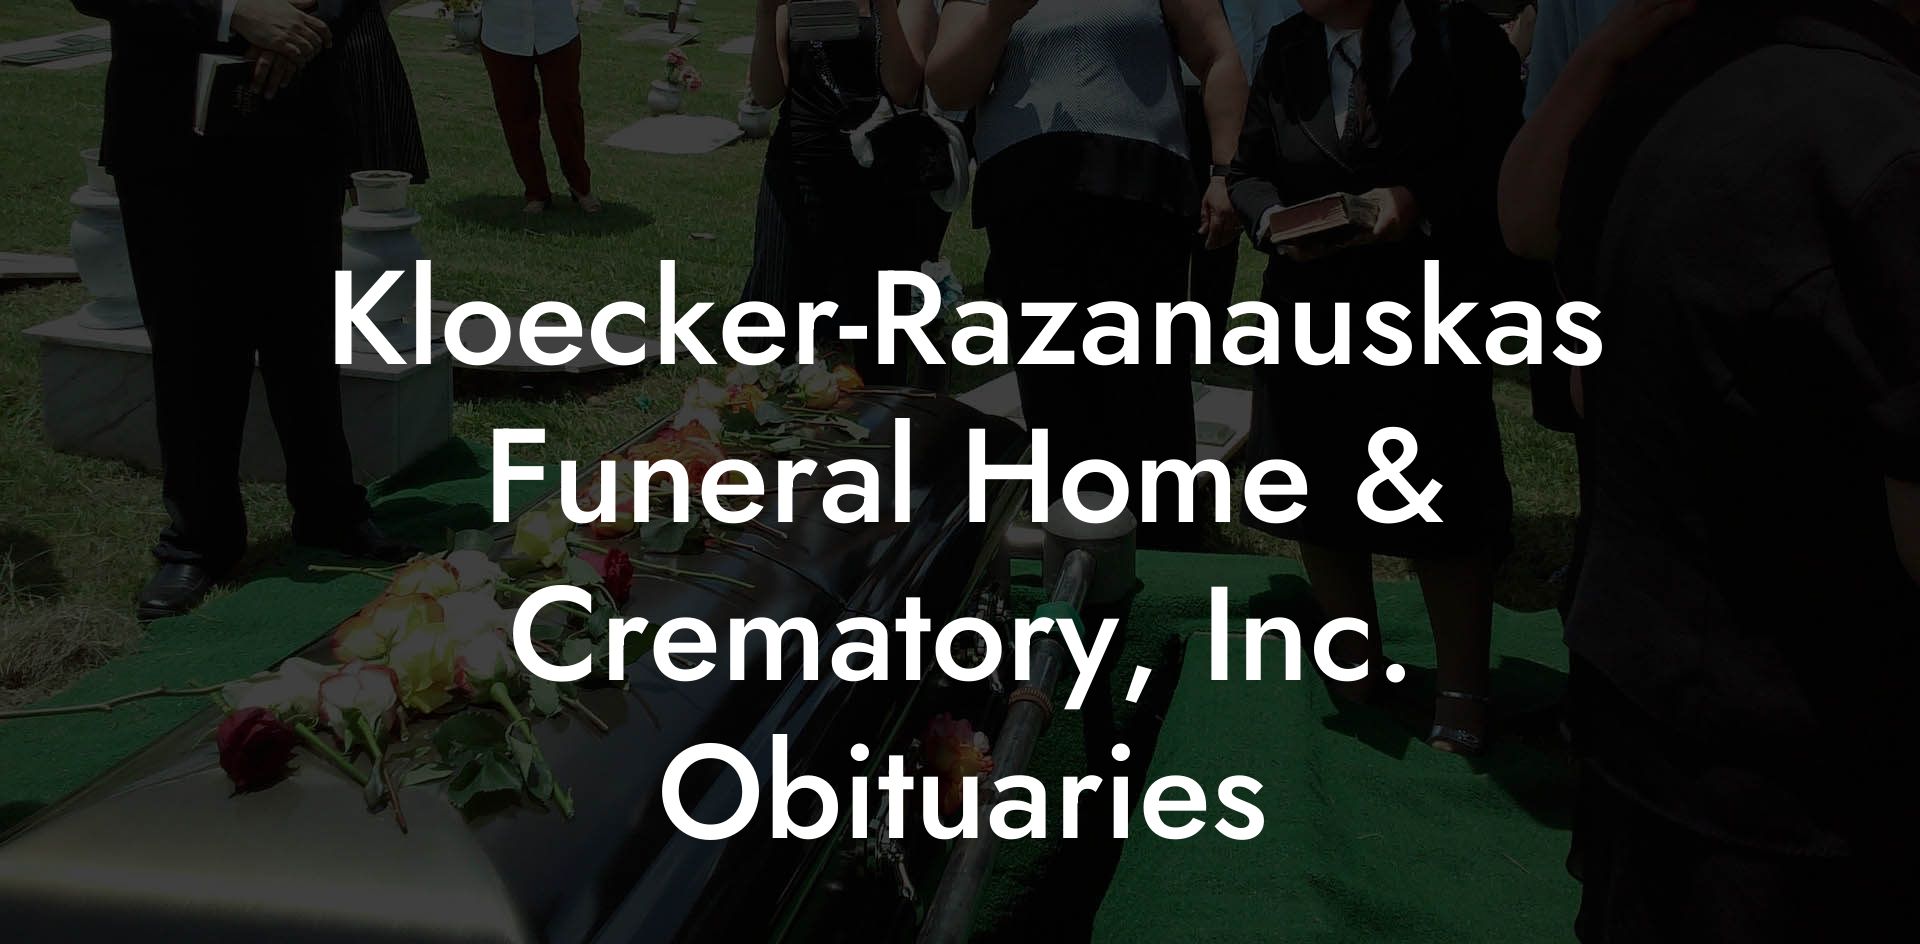 Kloecker-Razanauskas Funeral Home & Crematory, Inc. Obituaries